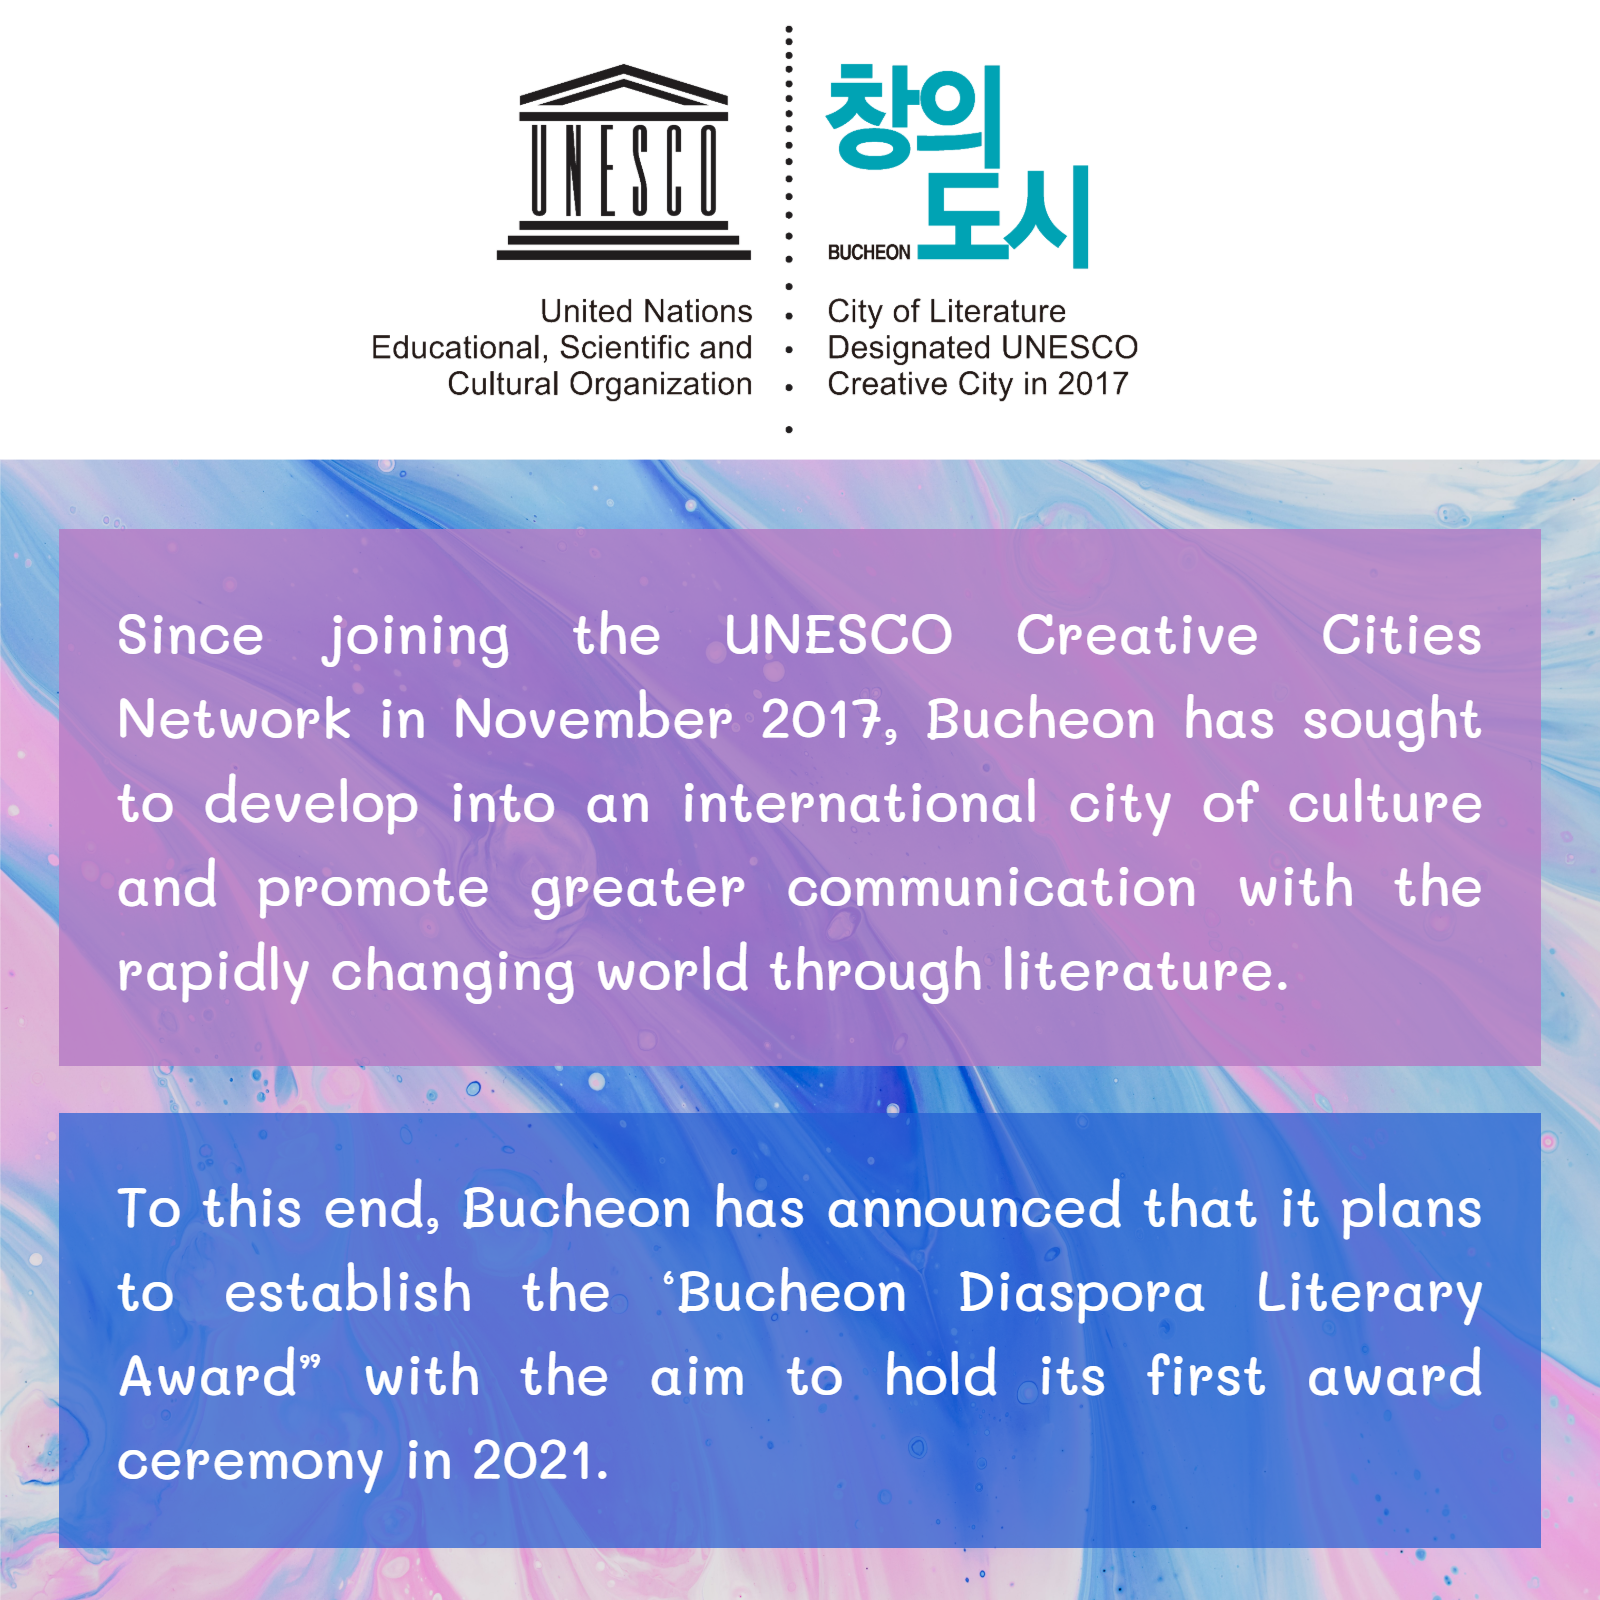 Bucheon UNESCO Creative City of Literature has established the Bucheon Diaspora Literary Award